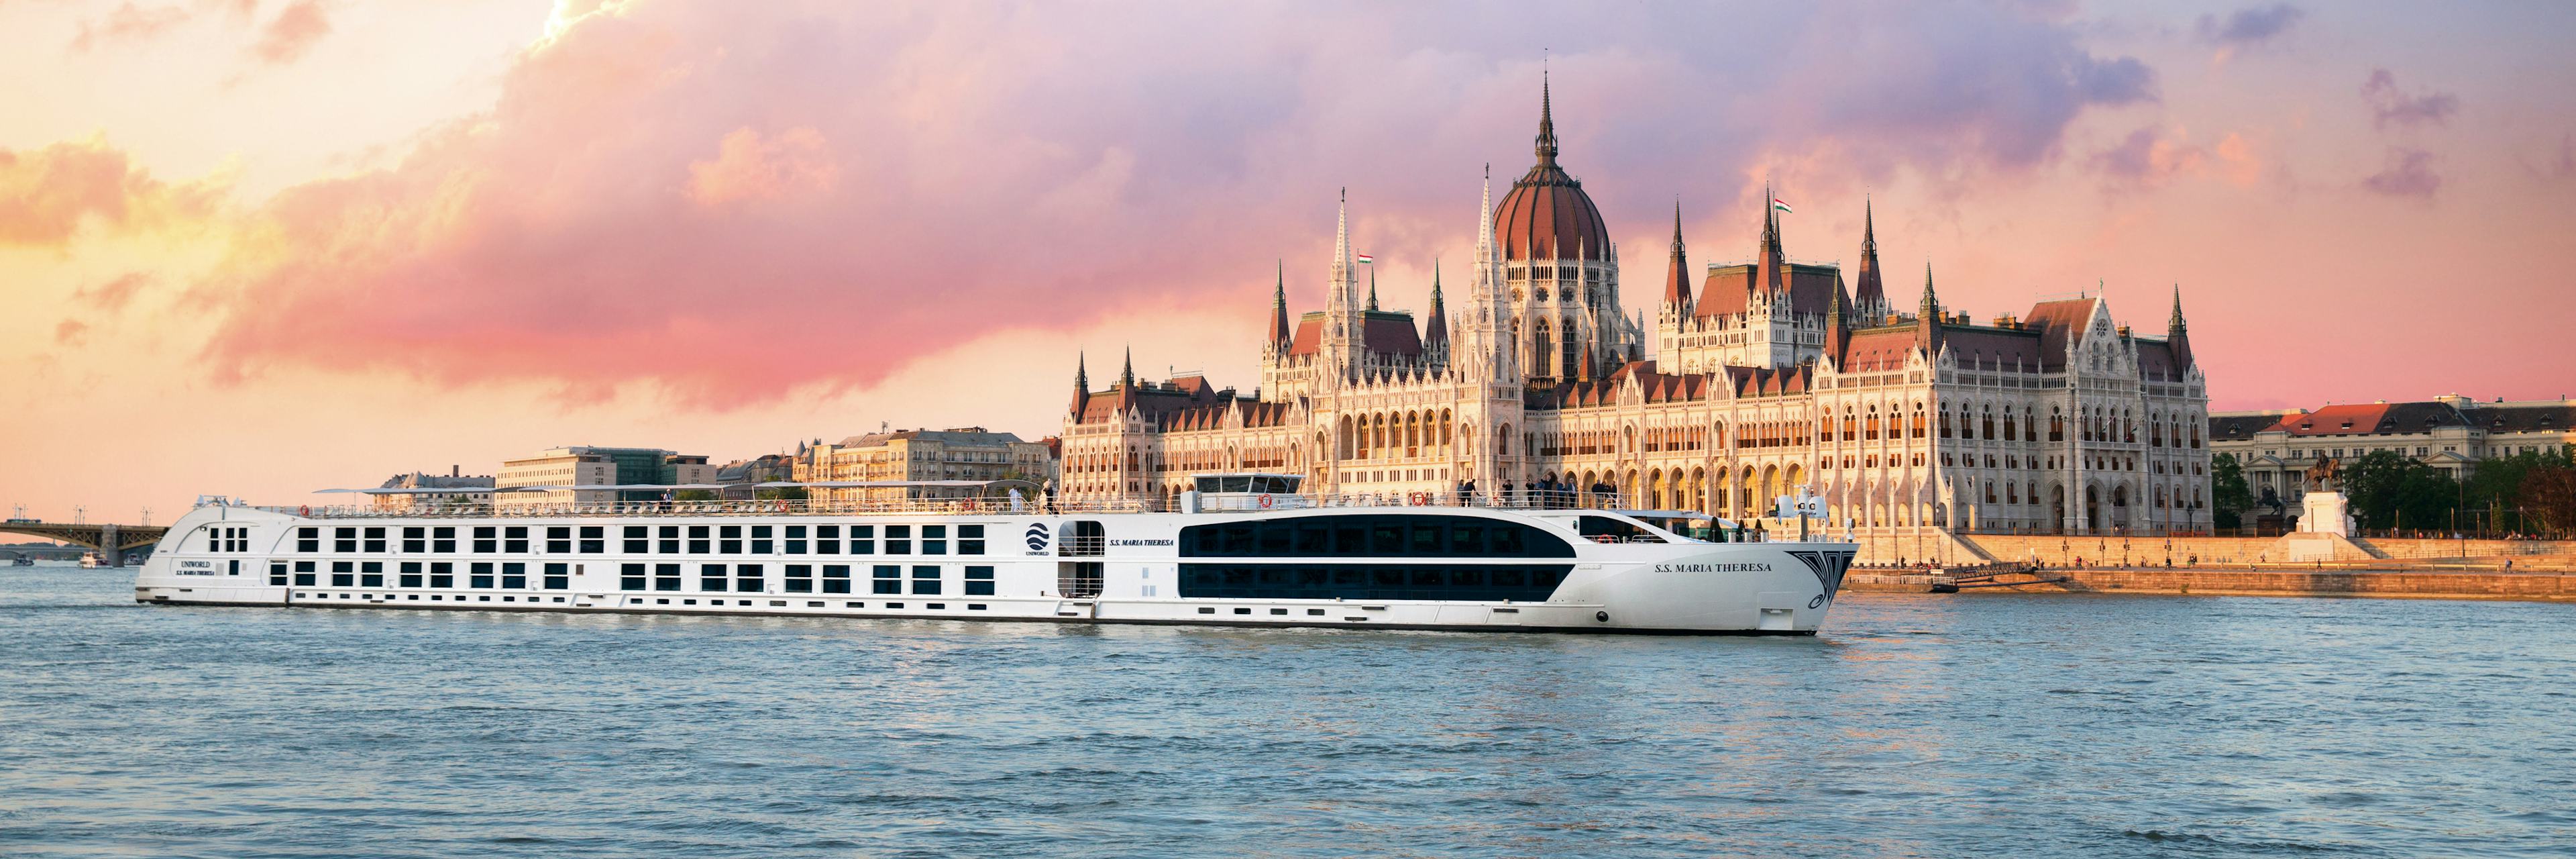 Uniworld river cruise ship in Budapest